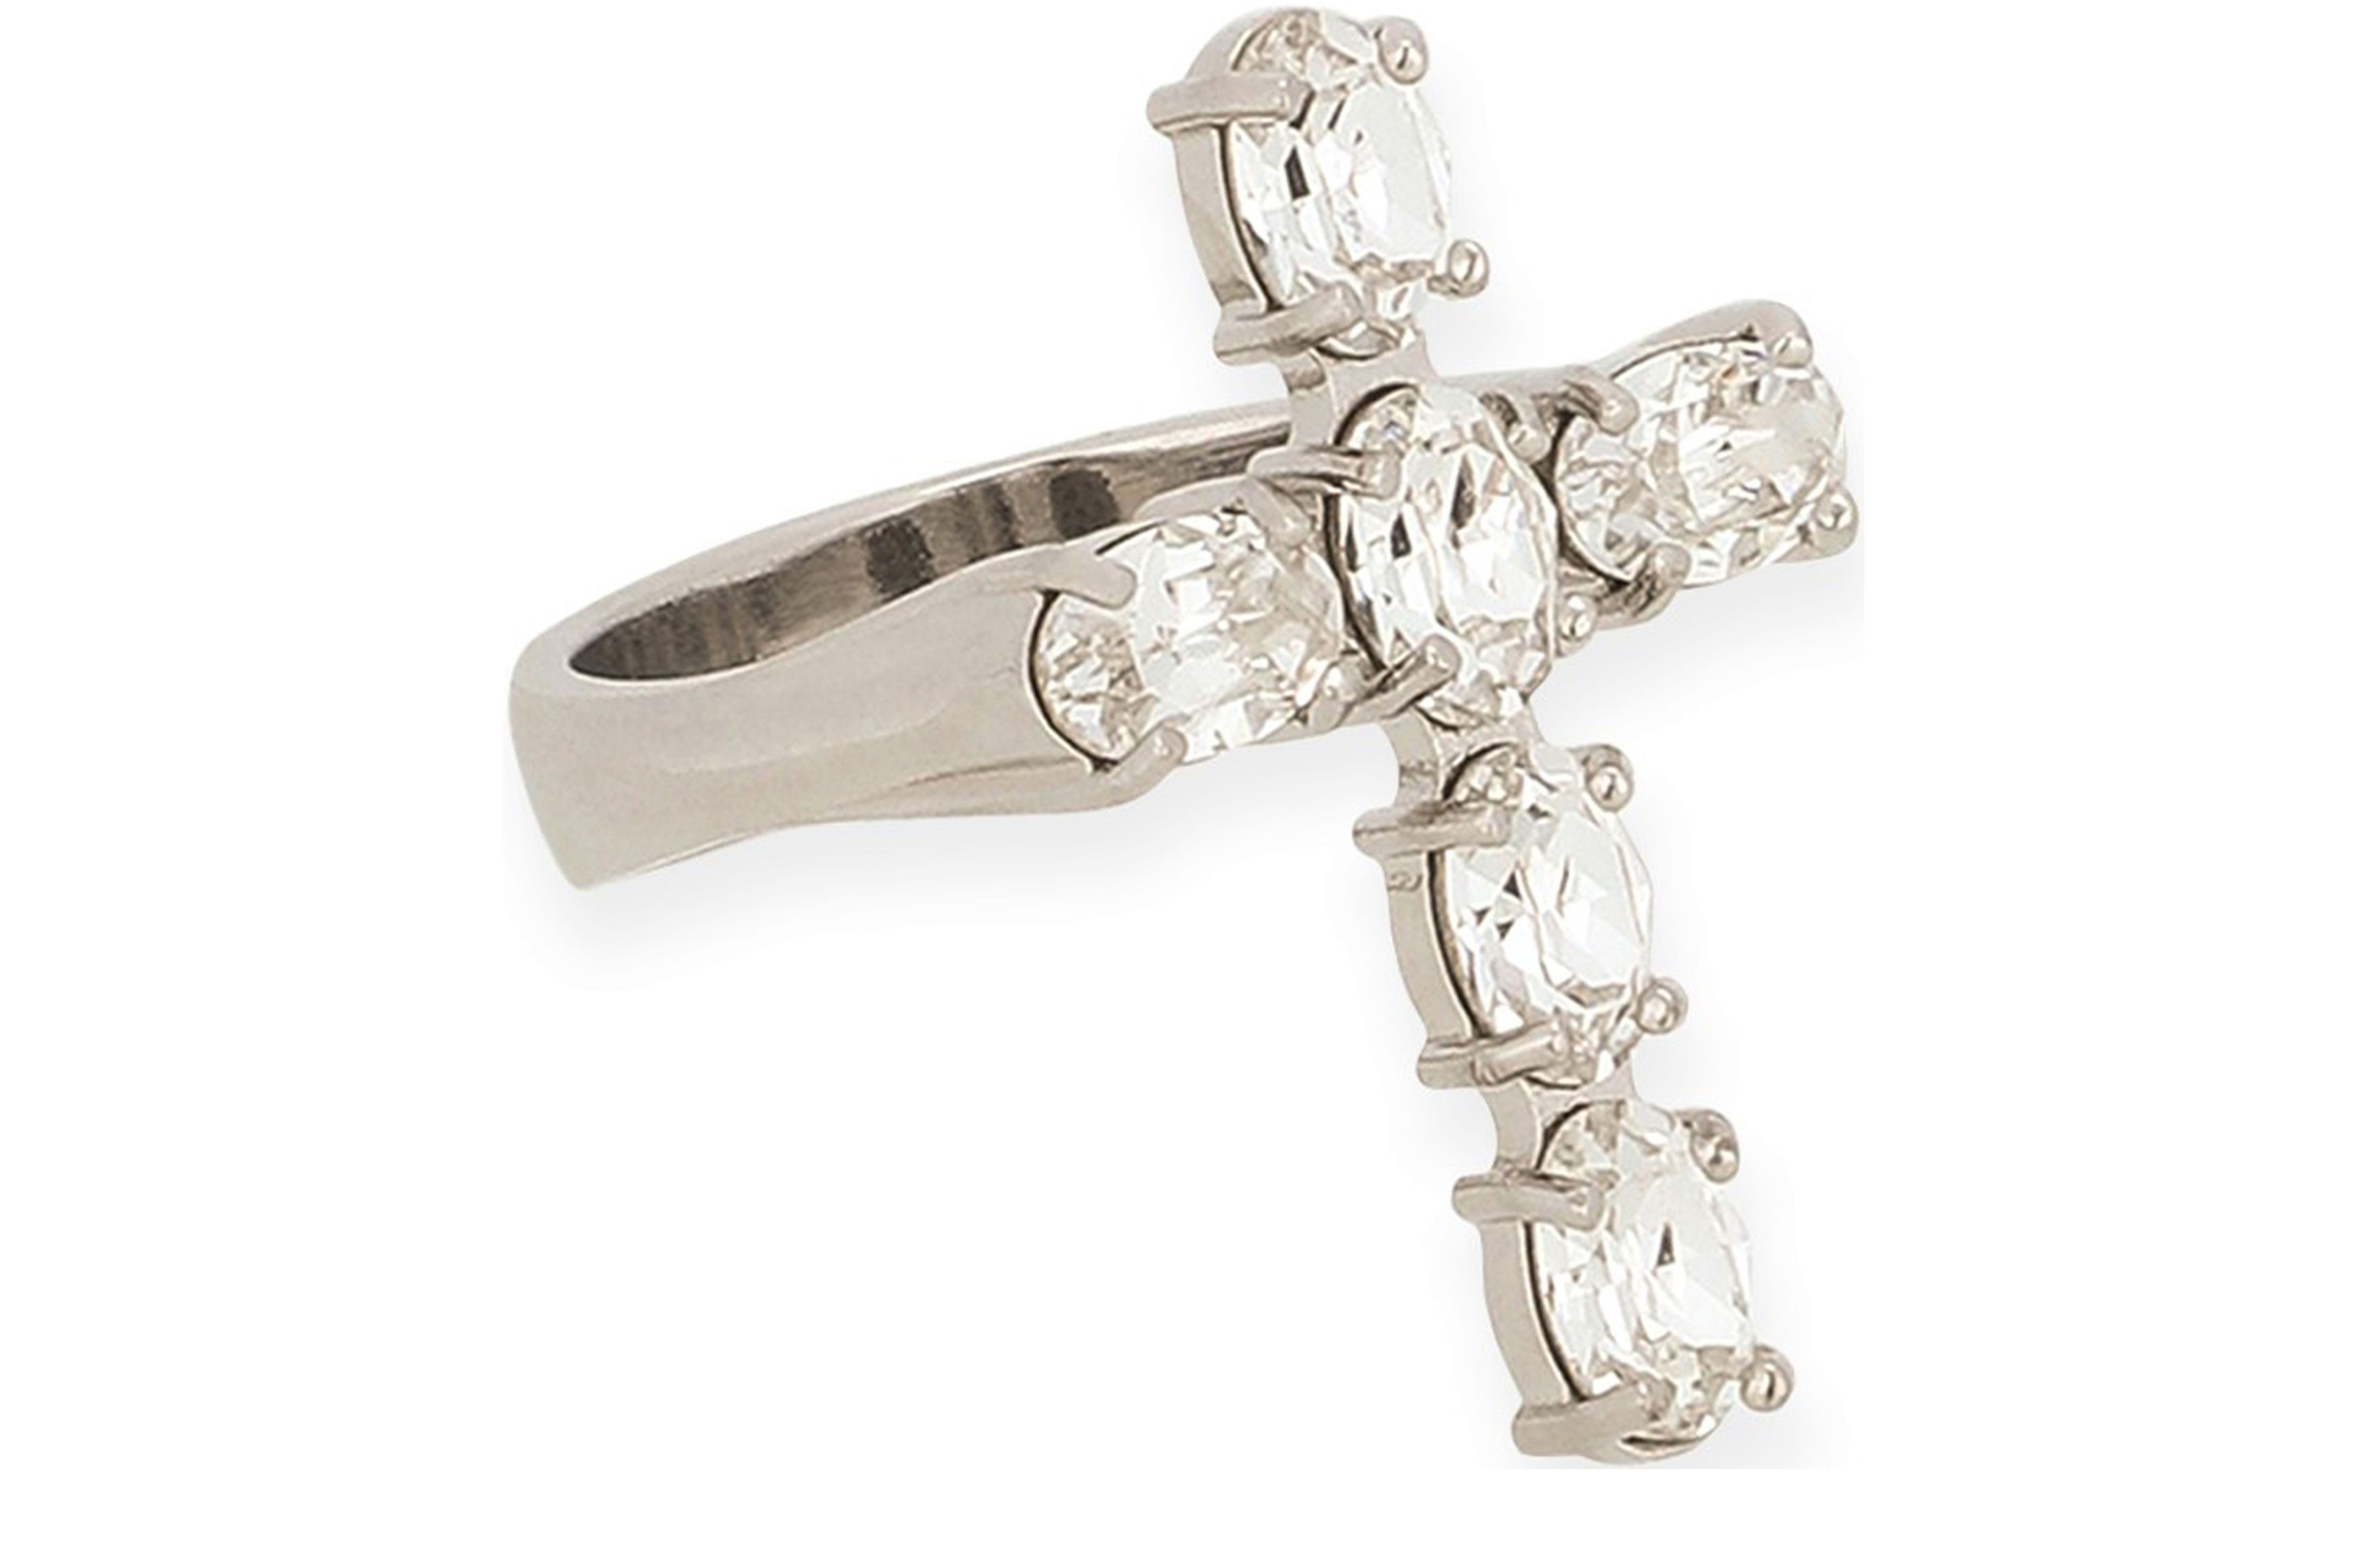 Dolce & Gabbana Ring with rhinestone cross